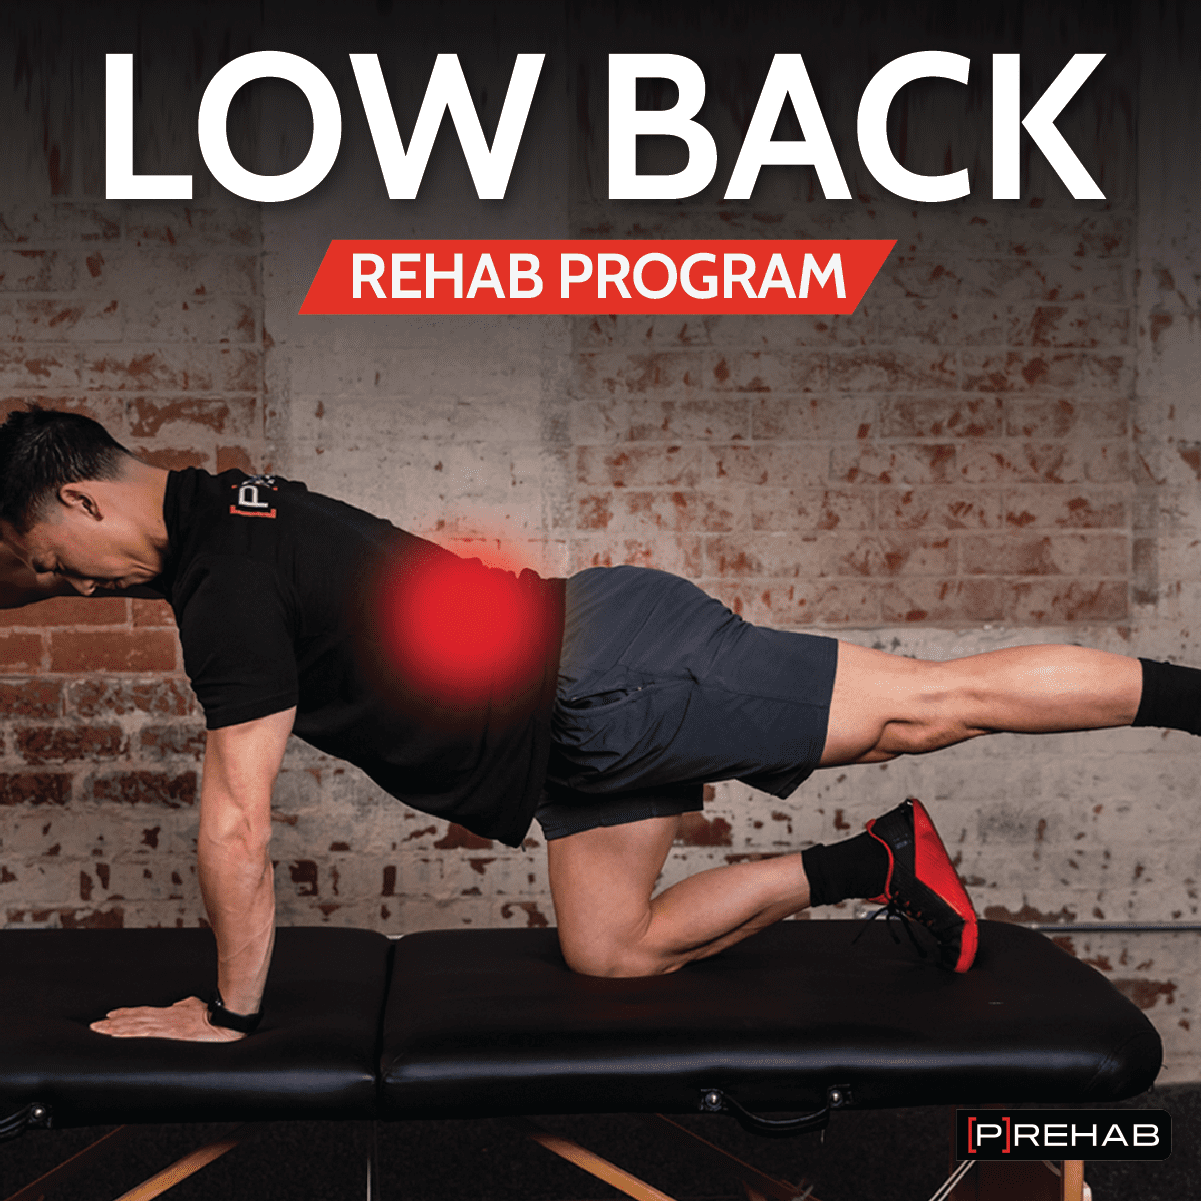 low back rehab program prehab guys exercises for disc herniations